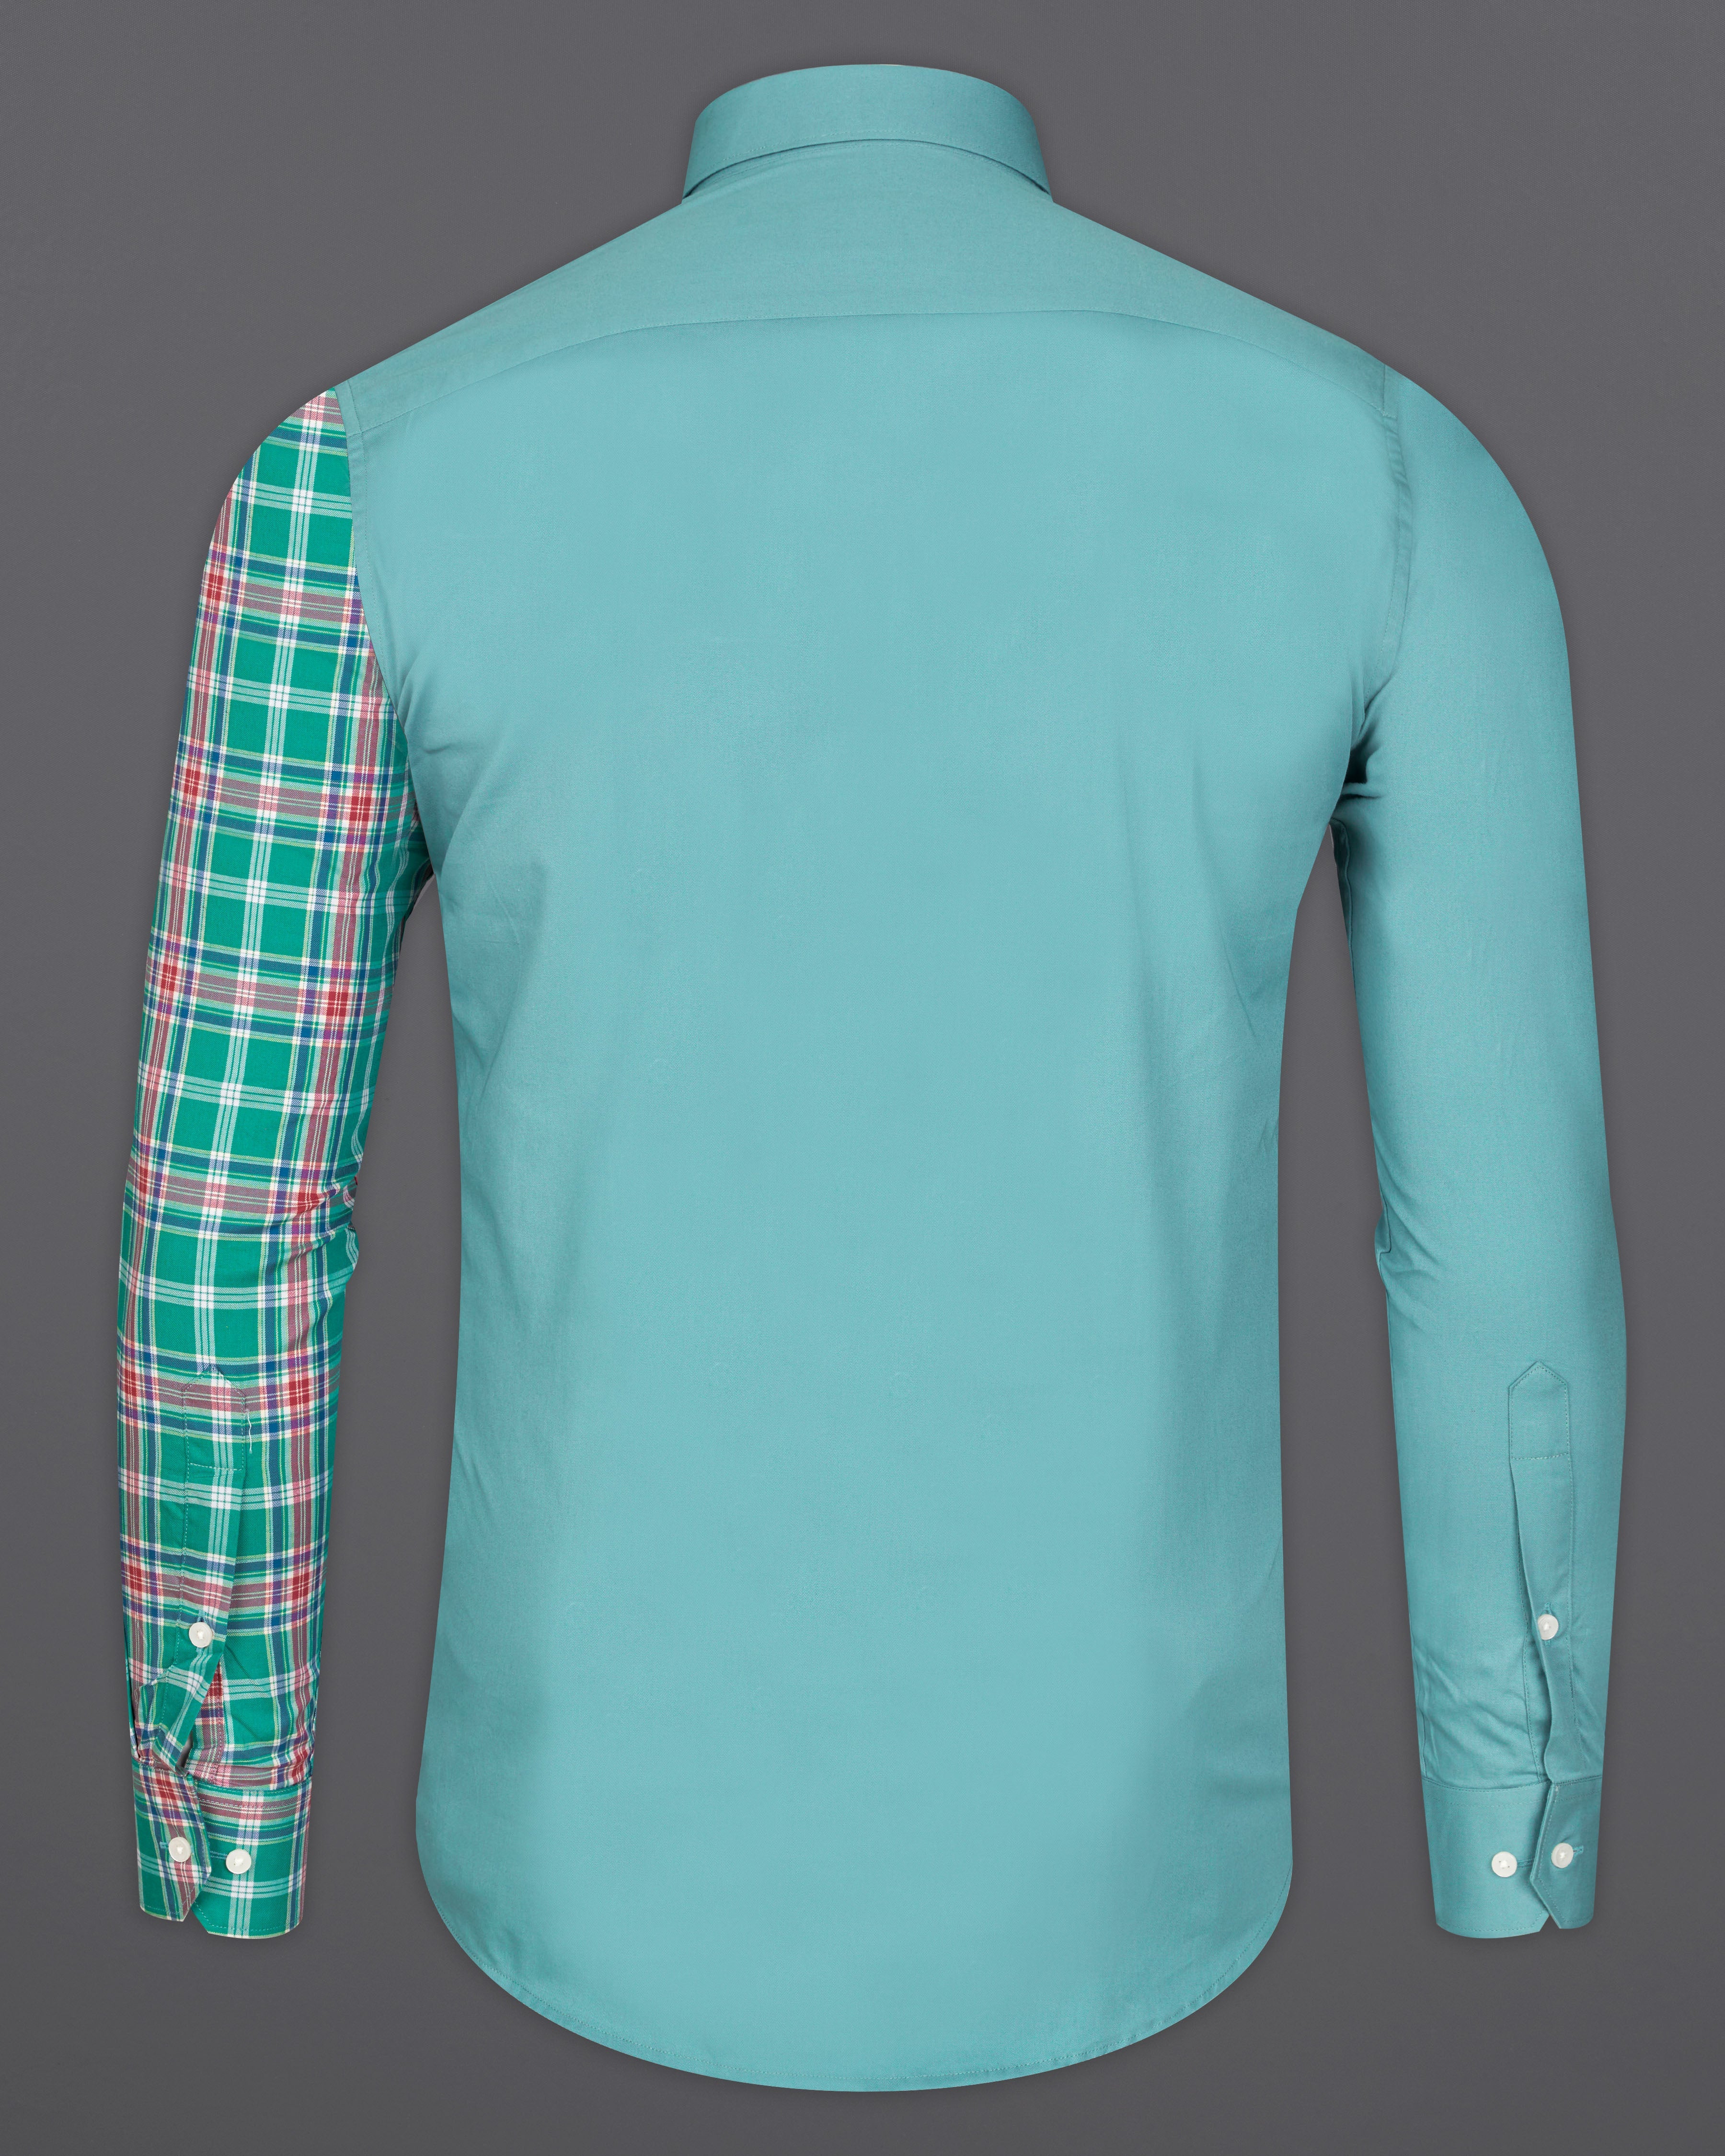 Oxley Green with Multicolour Checkered Royal Oxford Designer Shirt 9368-P110-38, 9368-P110-H-38, 9368-P110-39, 9368-P110-H-39, 9368-P110-40, 9368-P110-H-40, 9368-P110-42, 9368-P110-H-42, 9368-P110-44, 9368-P110-H-44, 9368-P110-46, 9368-P110-H-46, 9368-P110-48, 9368-P110-H-48, 9368-P110-50, 9368-P110-H-50, 9368-P110-52, 9368-P110-H-52